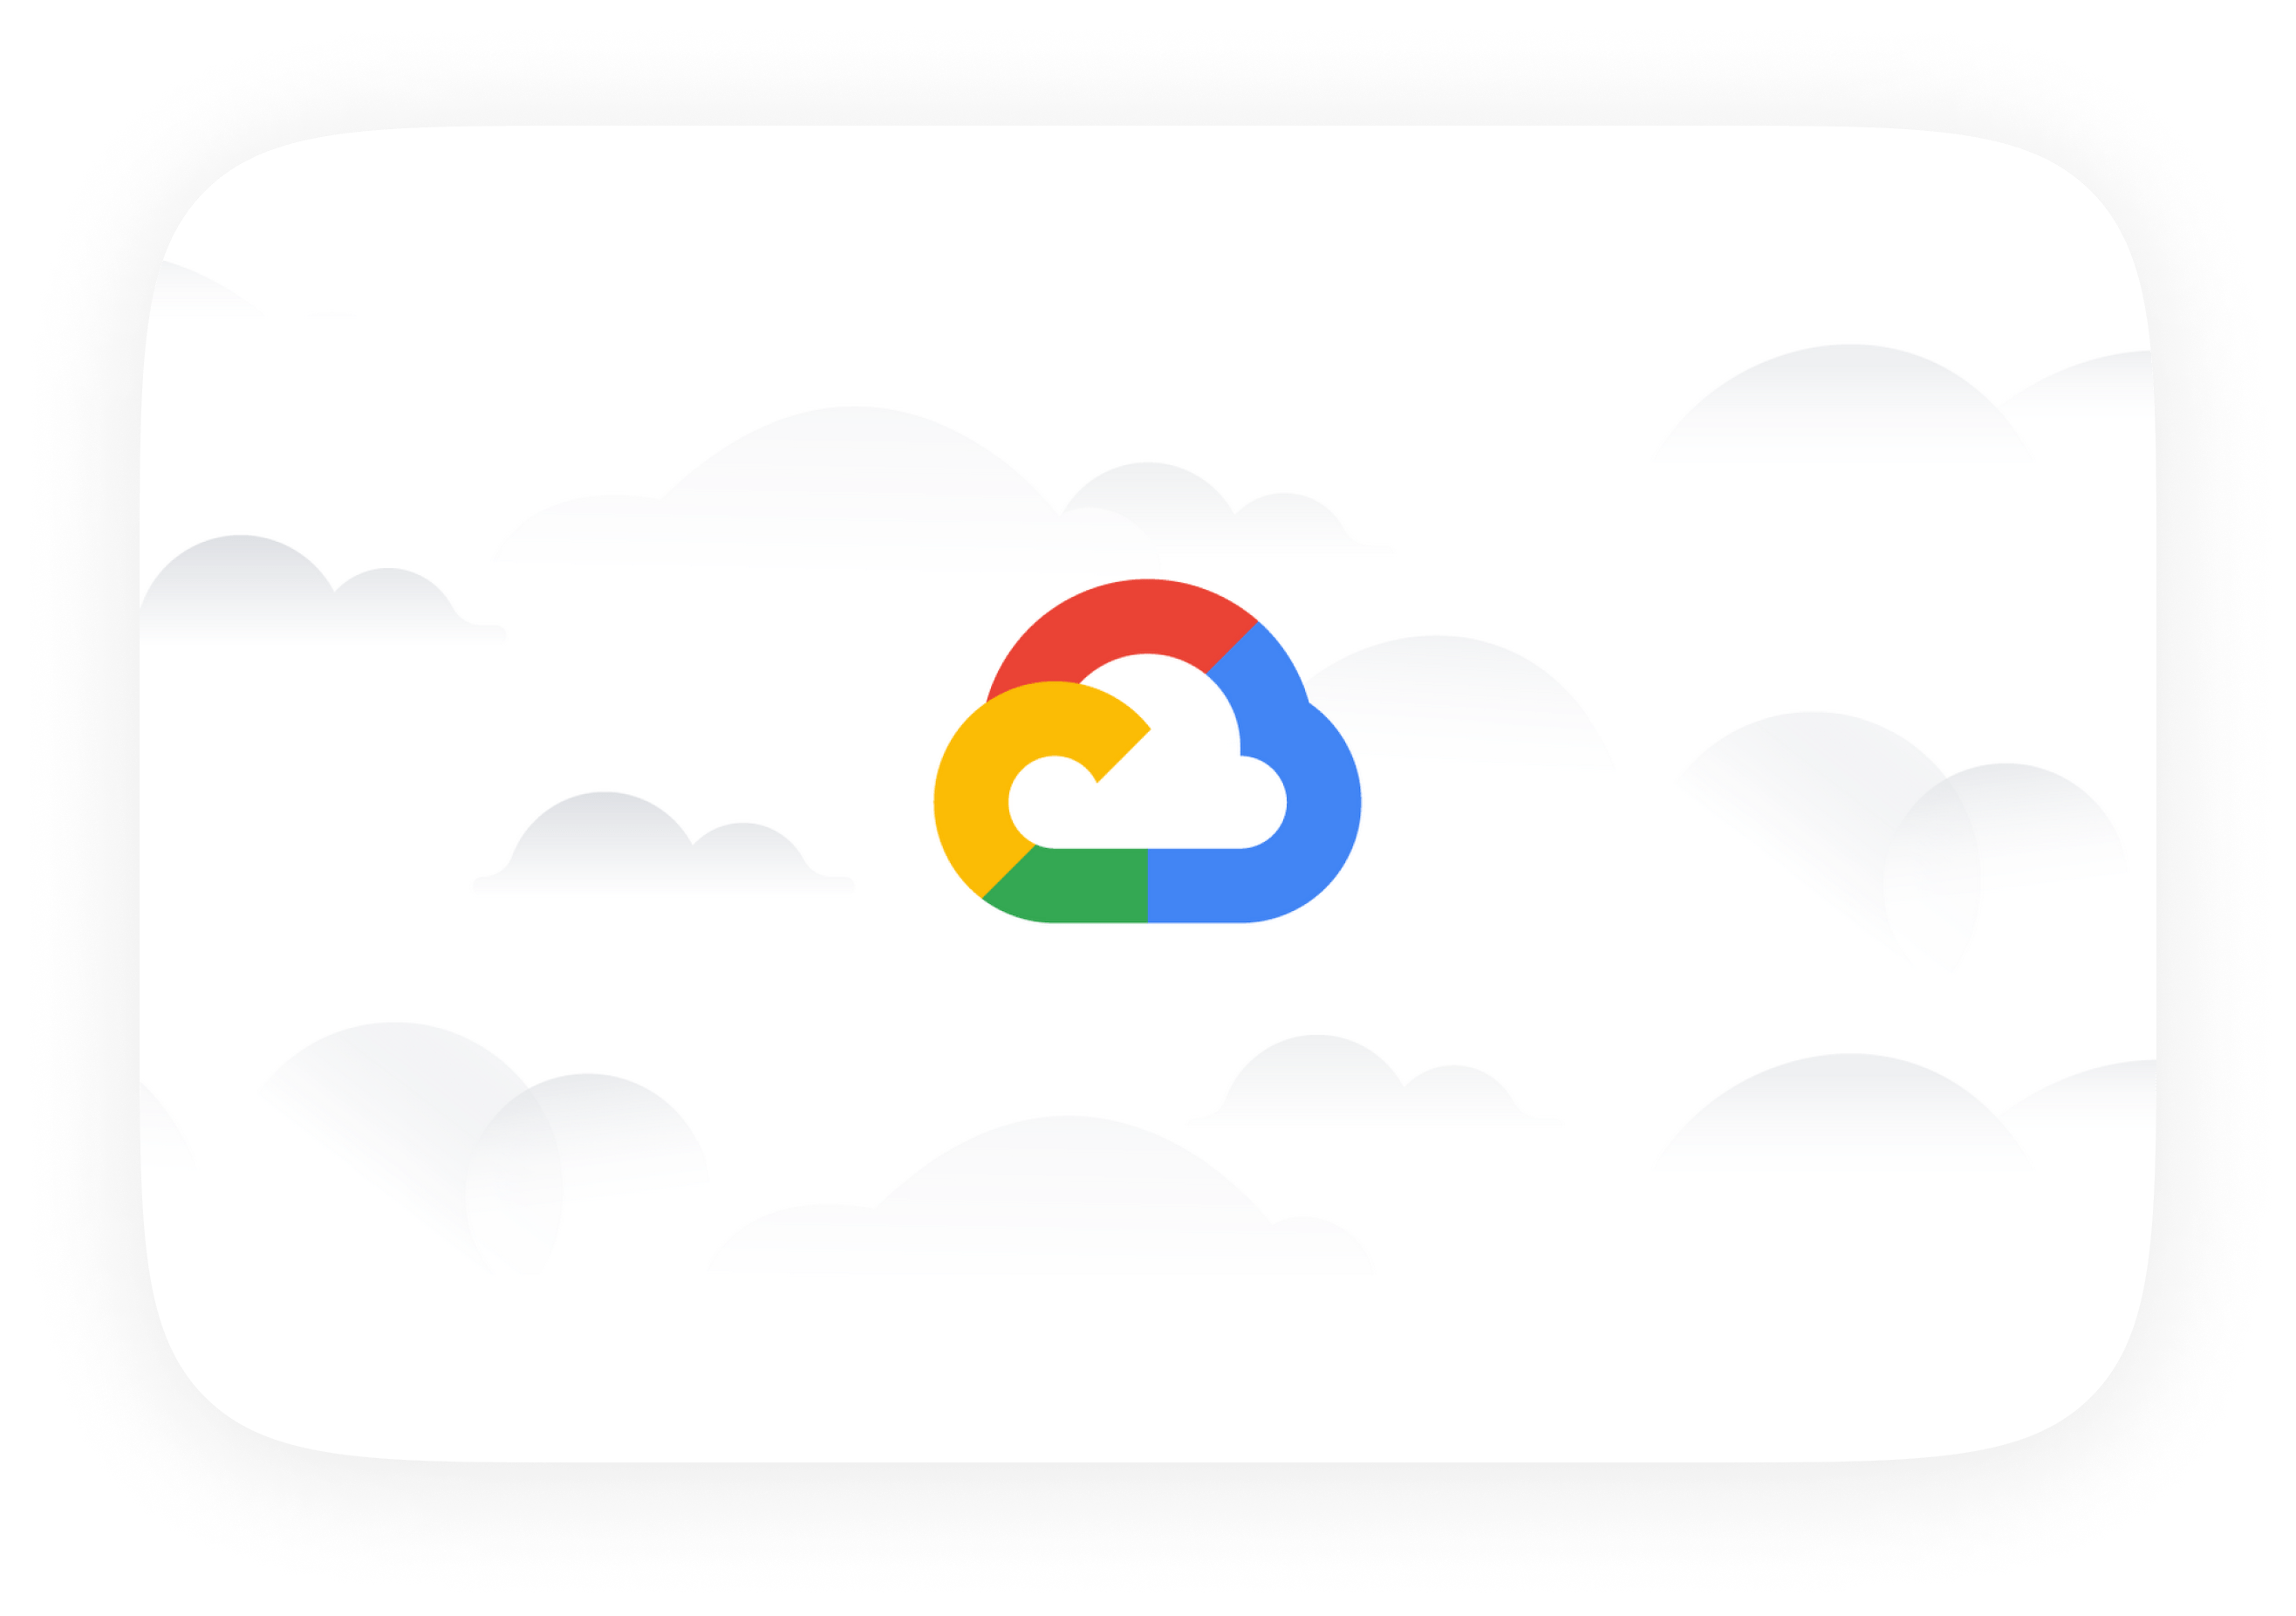 Image of Google Cloud Platform's logo